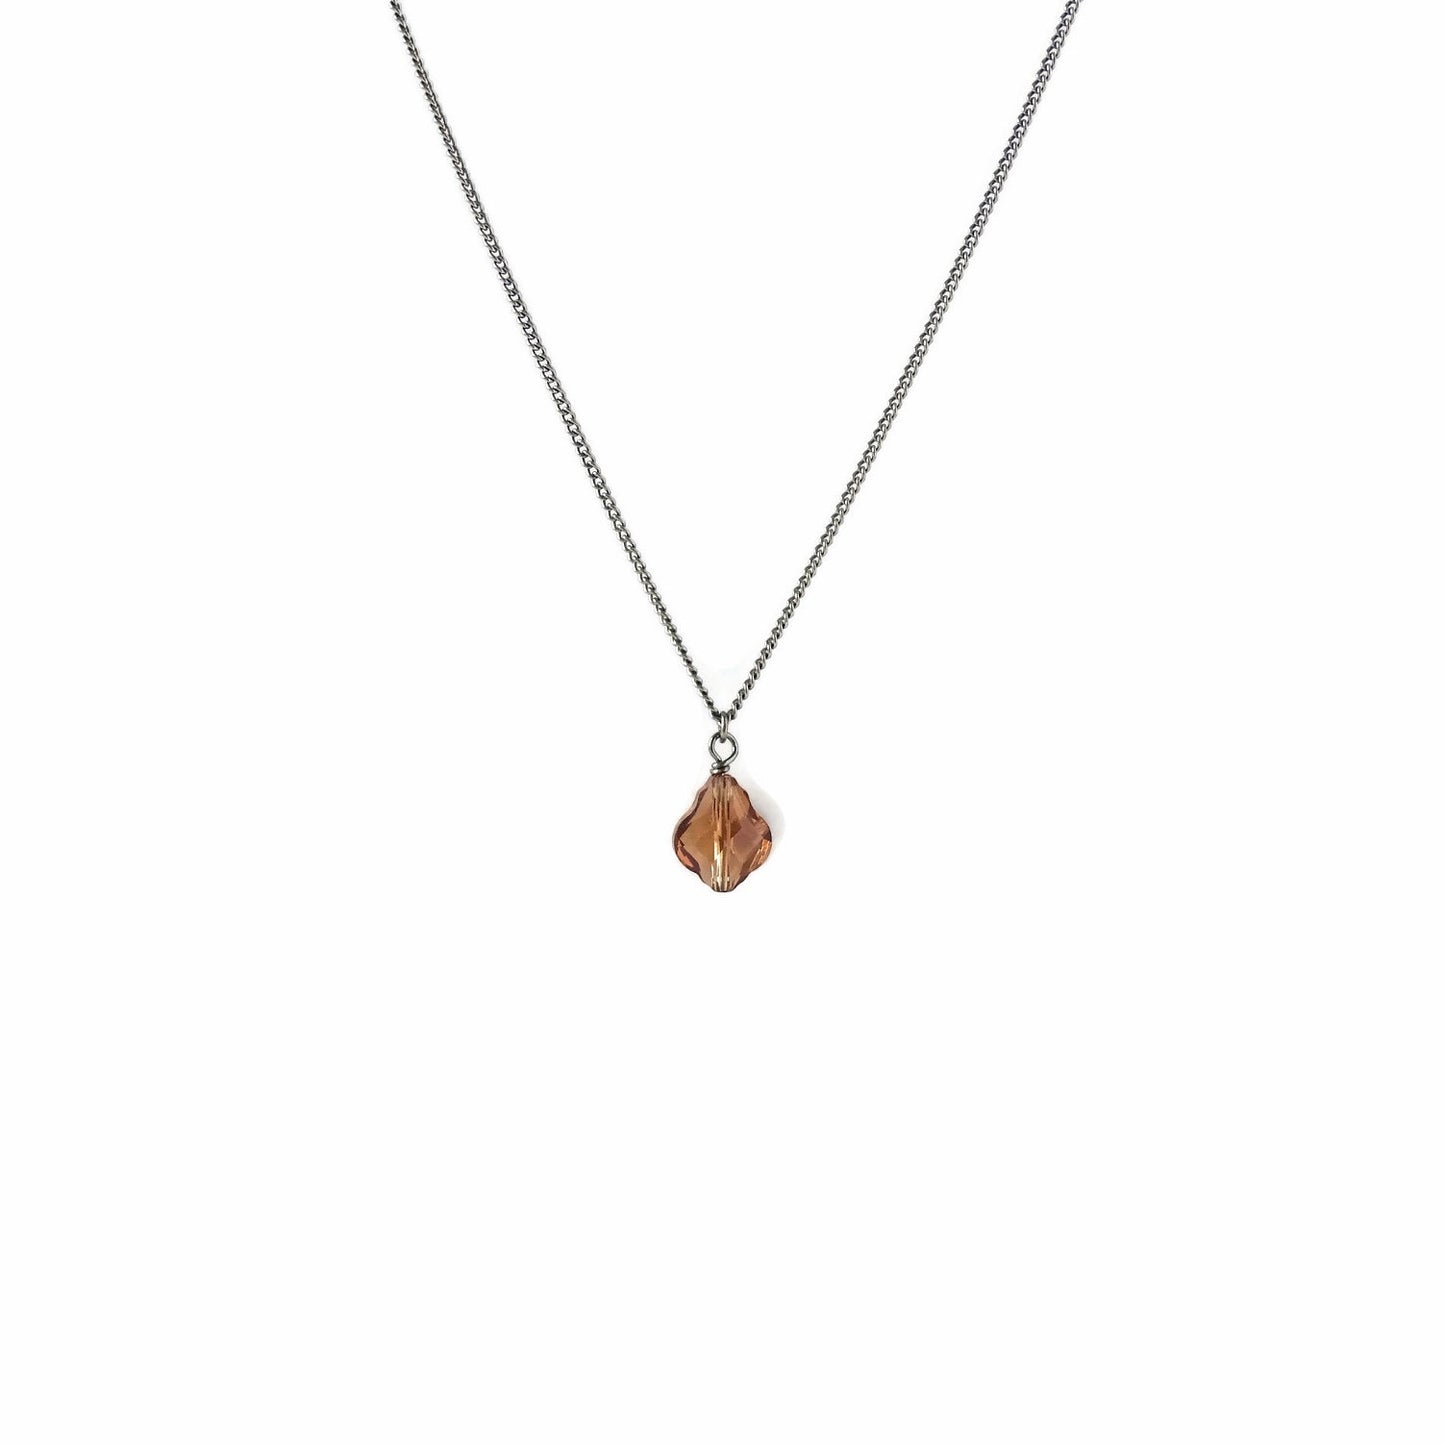 Topaz Baroque Crystal Titanium Necklace, Nickel Free Necklace For Sensitive Skin, Light Smoked Topaz Swarovski Crystal Pure Titanium Jewelry